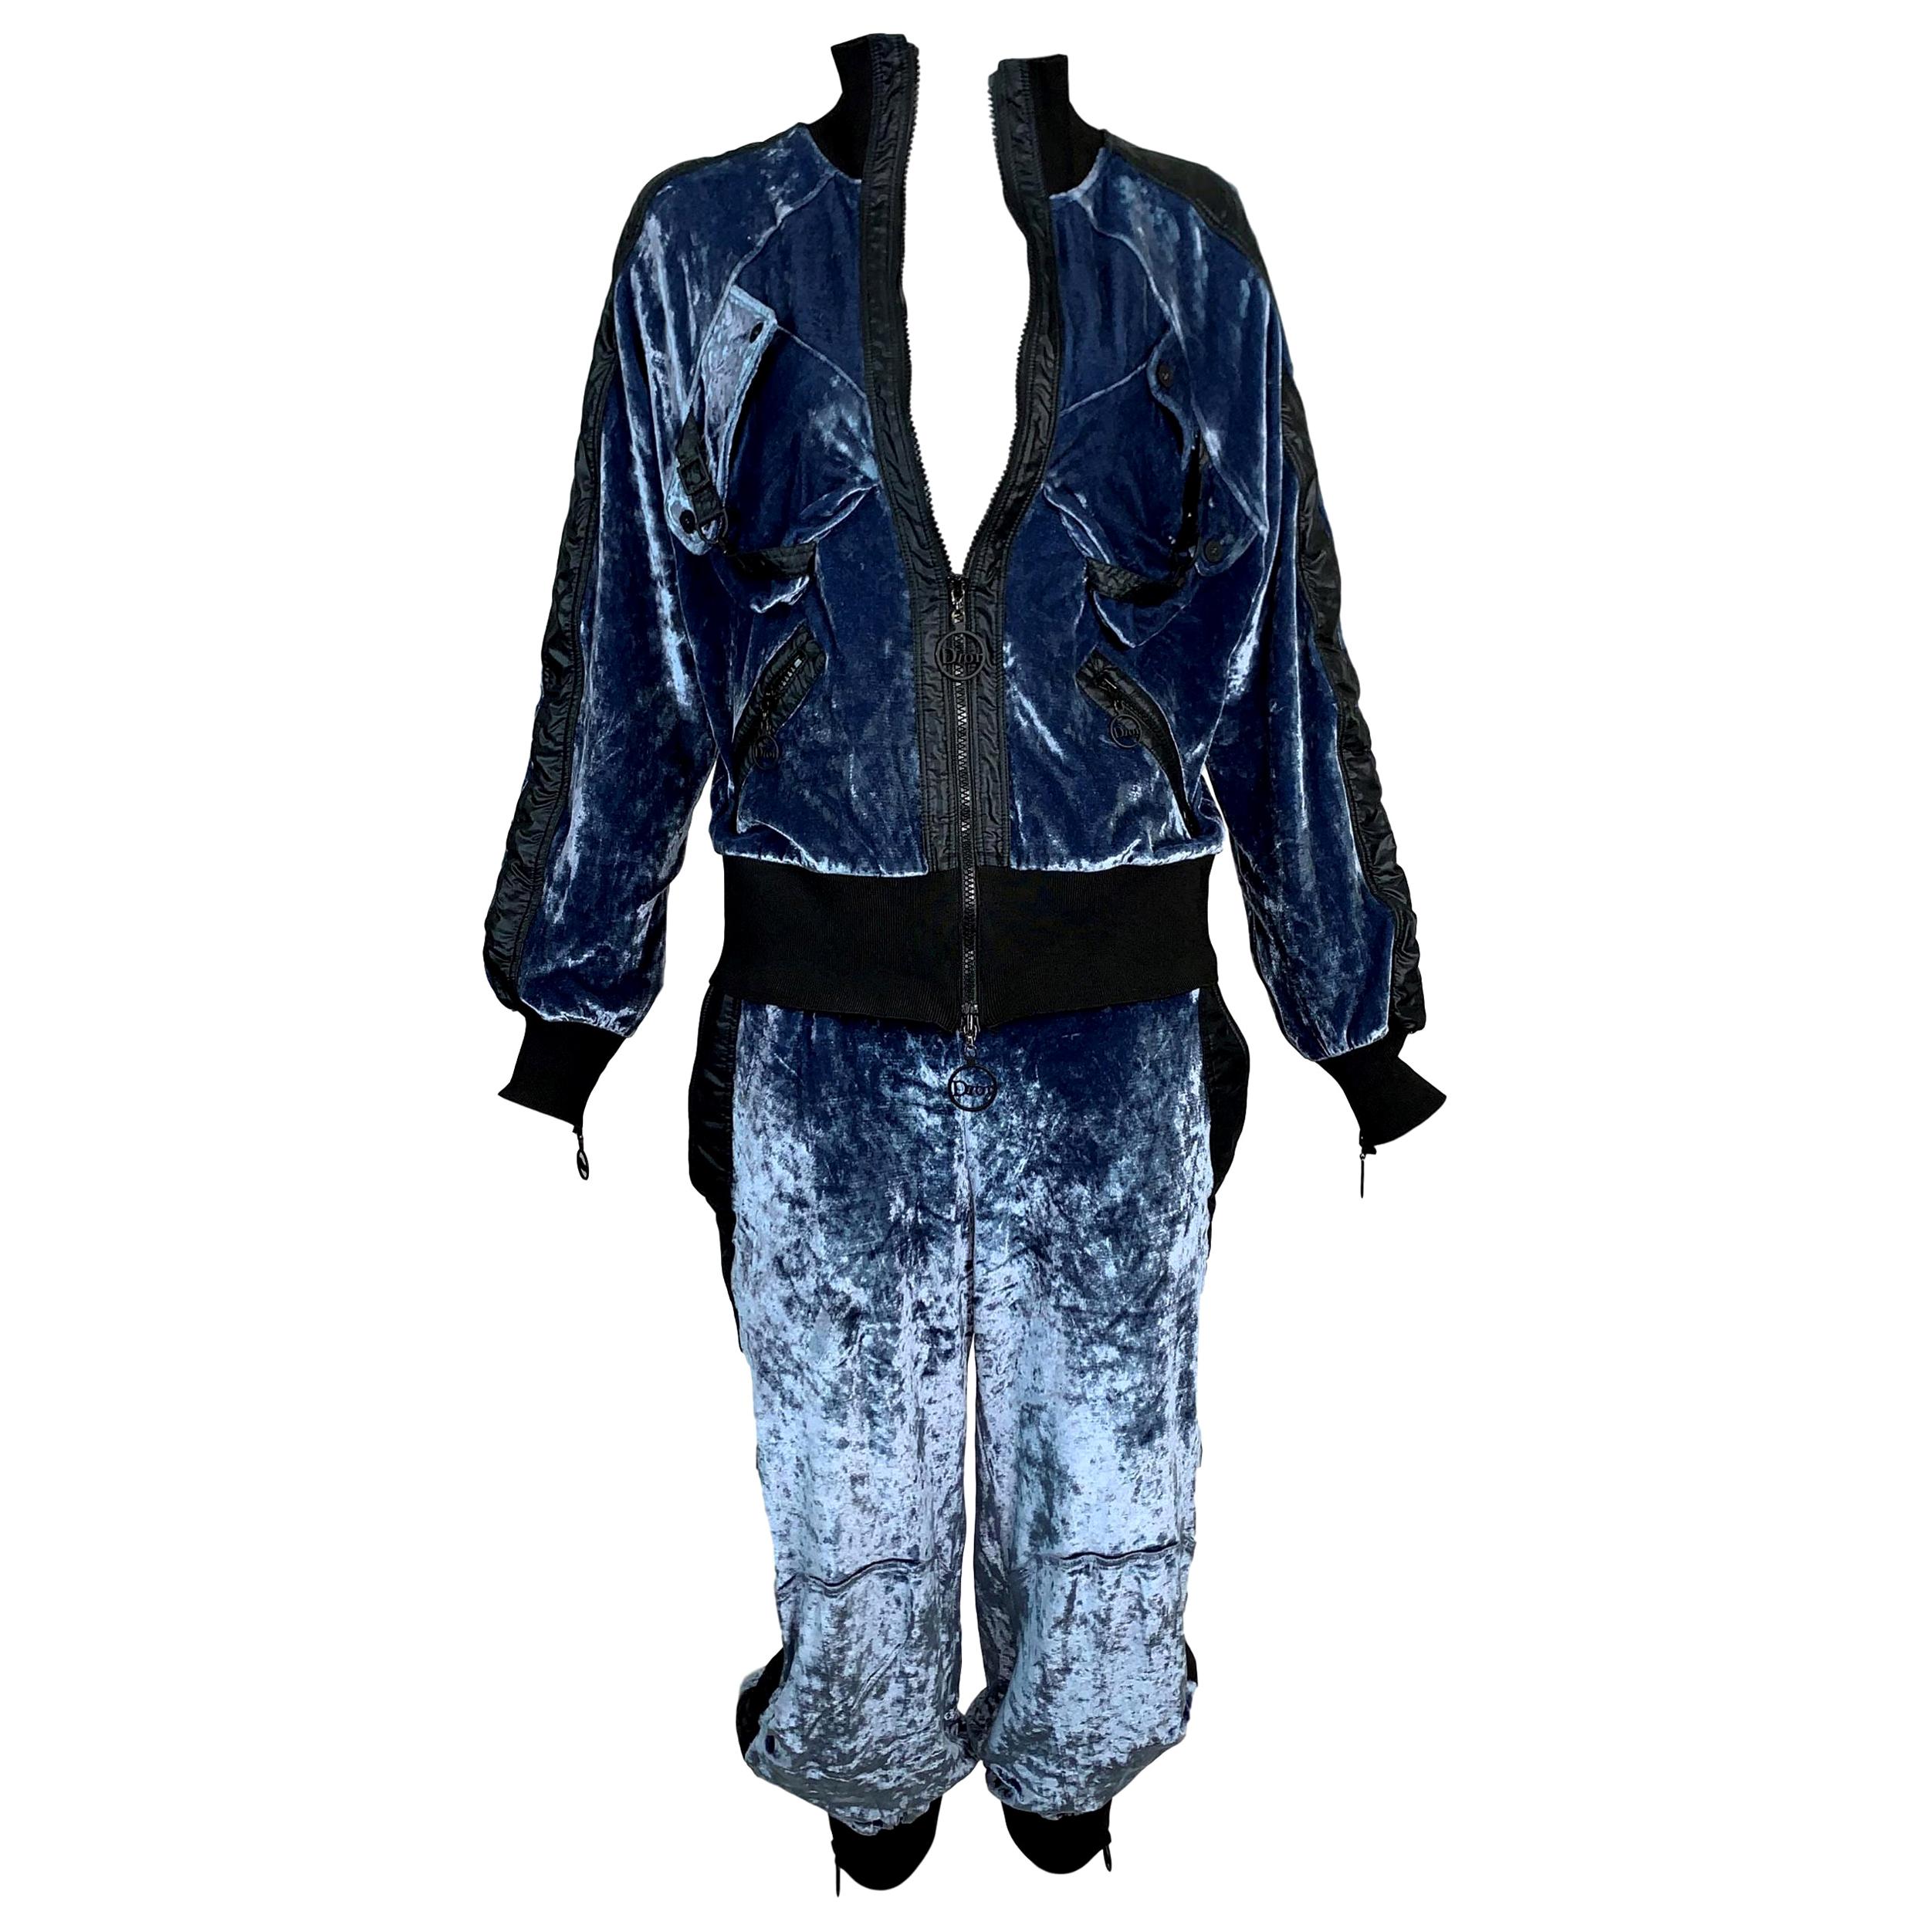 S/S 2004 Christian Dior John Galliano Blue Velvet Jacket & Pants Tracksuit